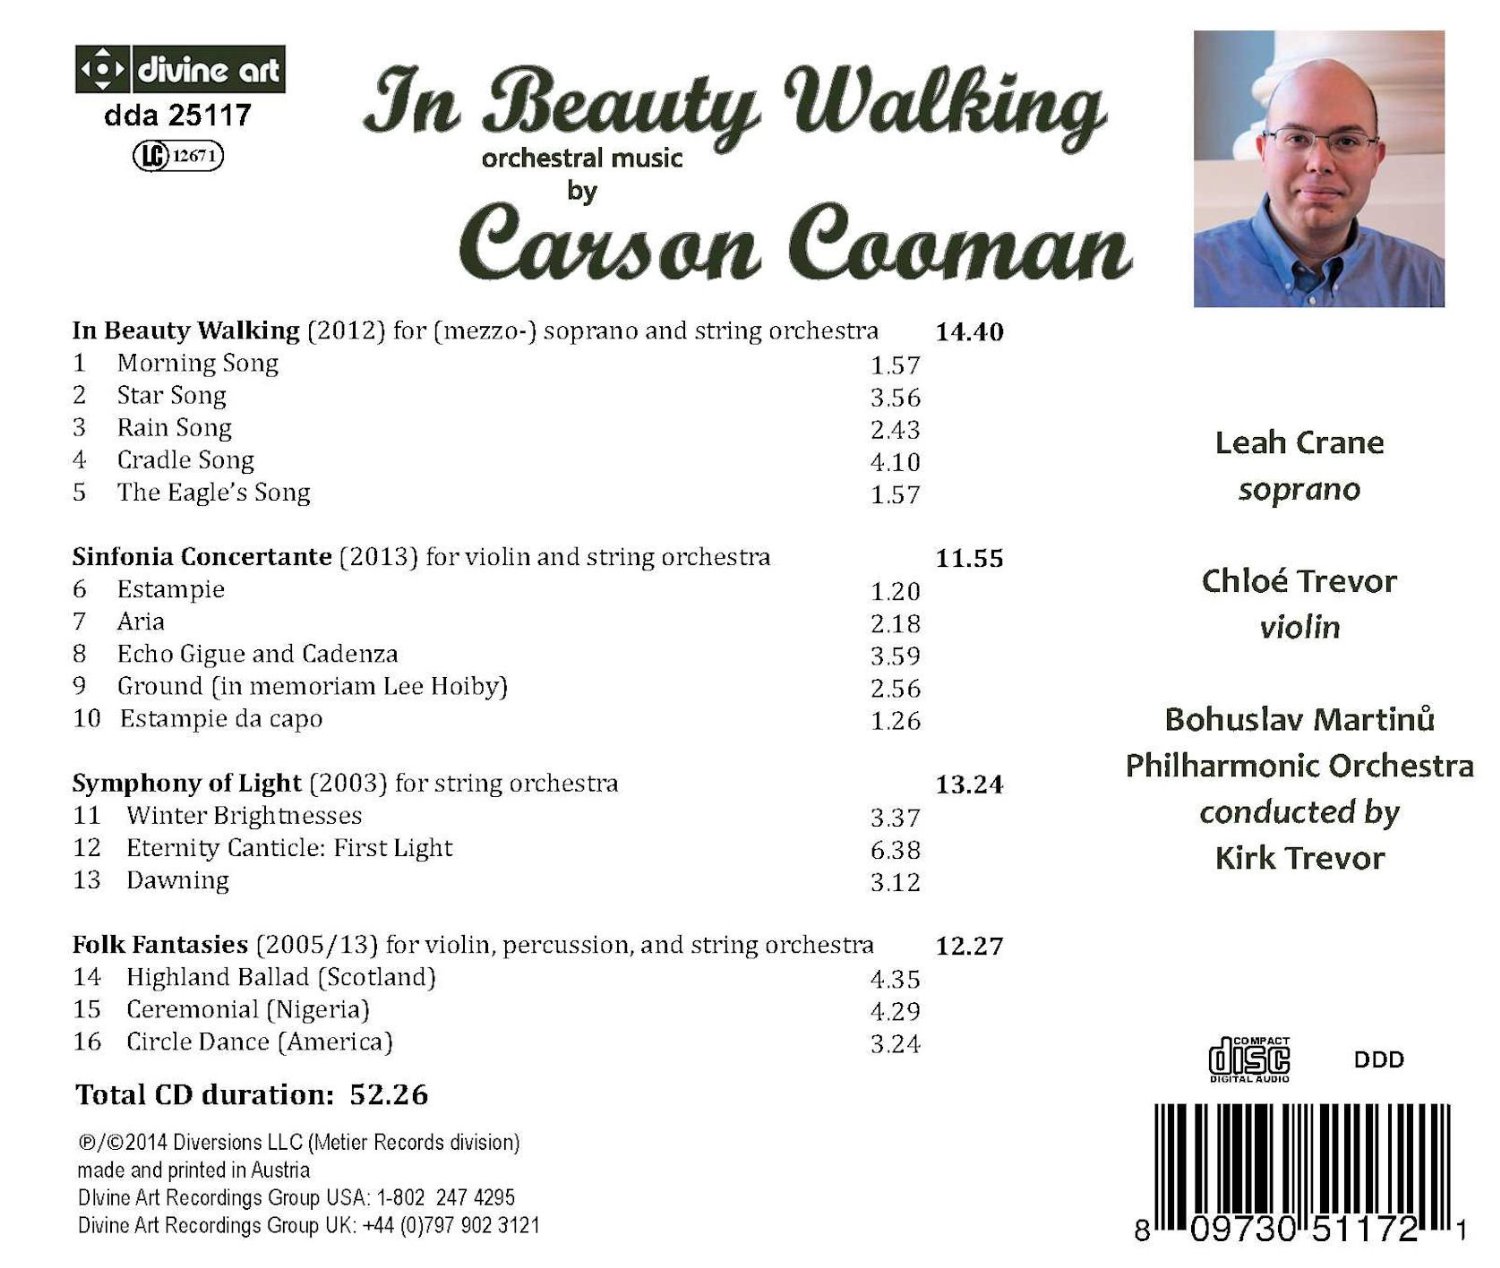 Orchestral music by Carson Cooman (b.1982): 'In Beauty Walking' / Leah Crane, soprano; Chloé Trevor, violin back cover